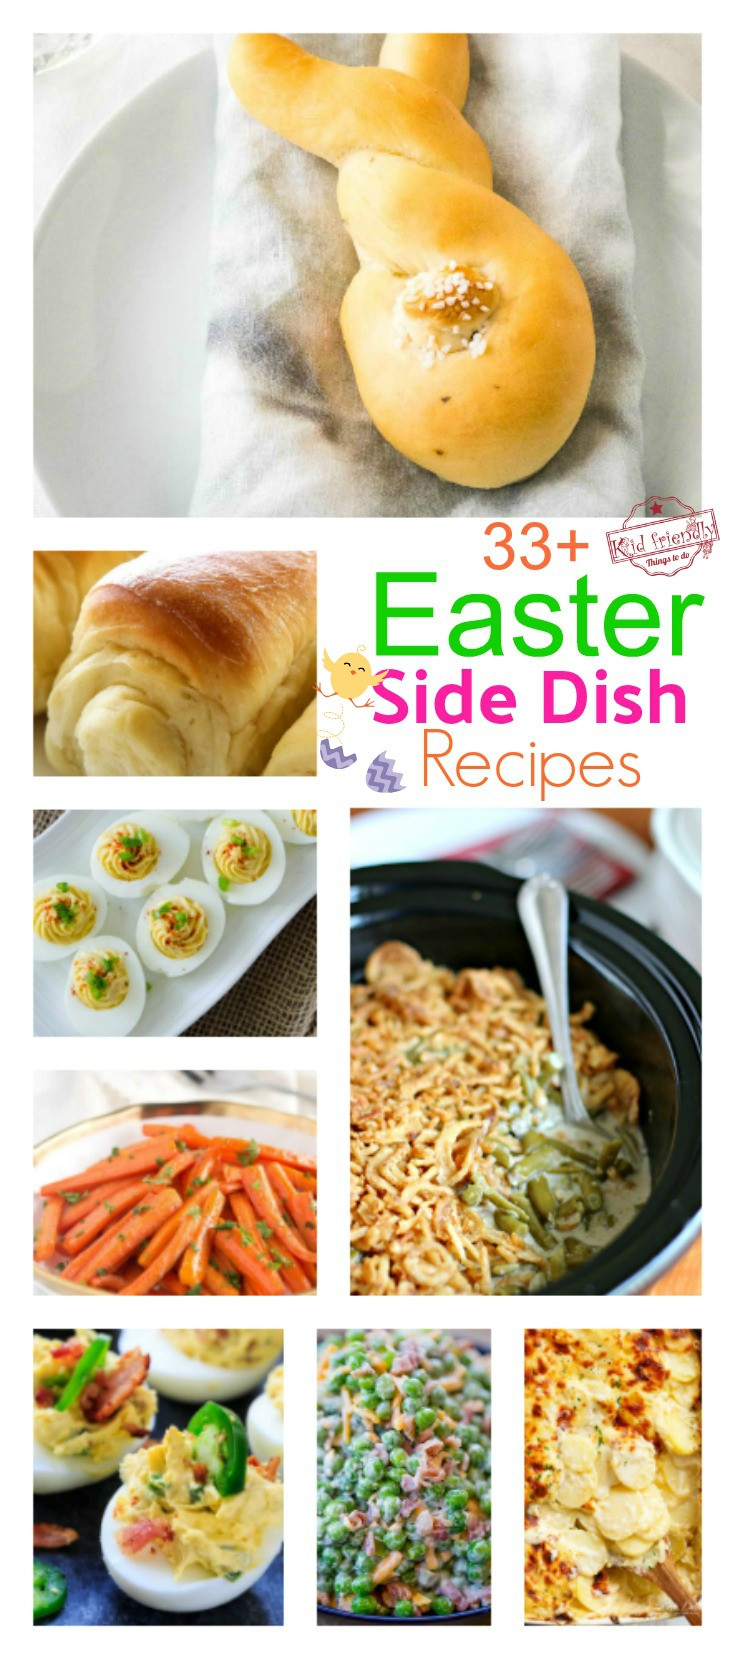 Traditional Easter Dinner Sides
 Over 33 Easter Side Dish Recipes for Your Celebration Dinner